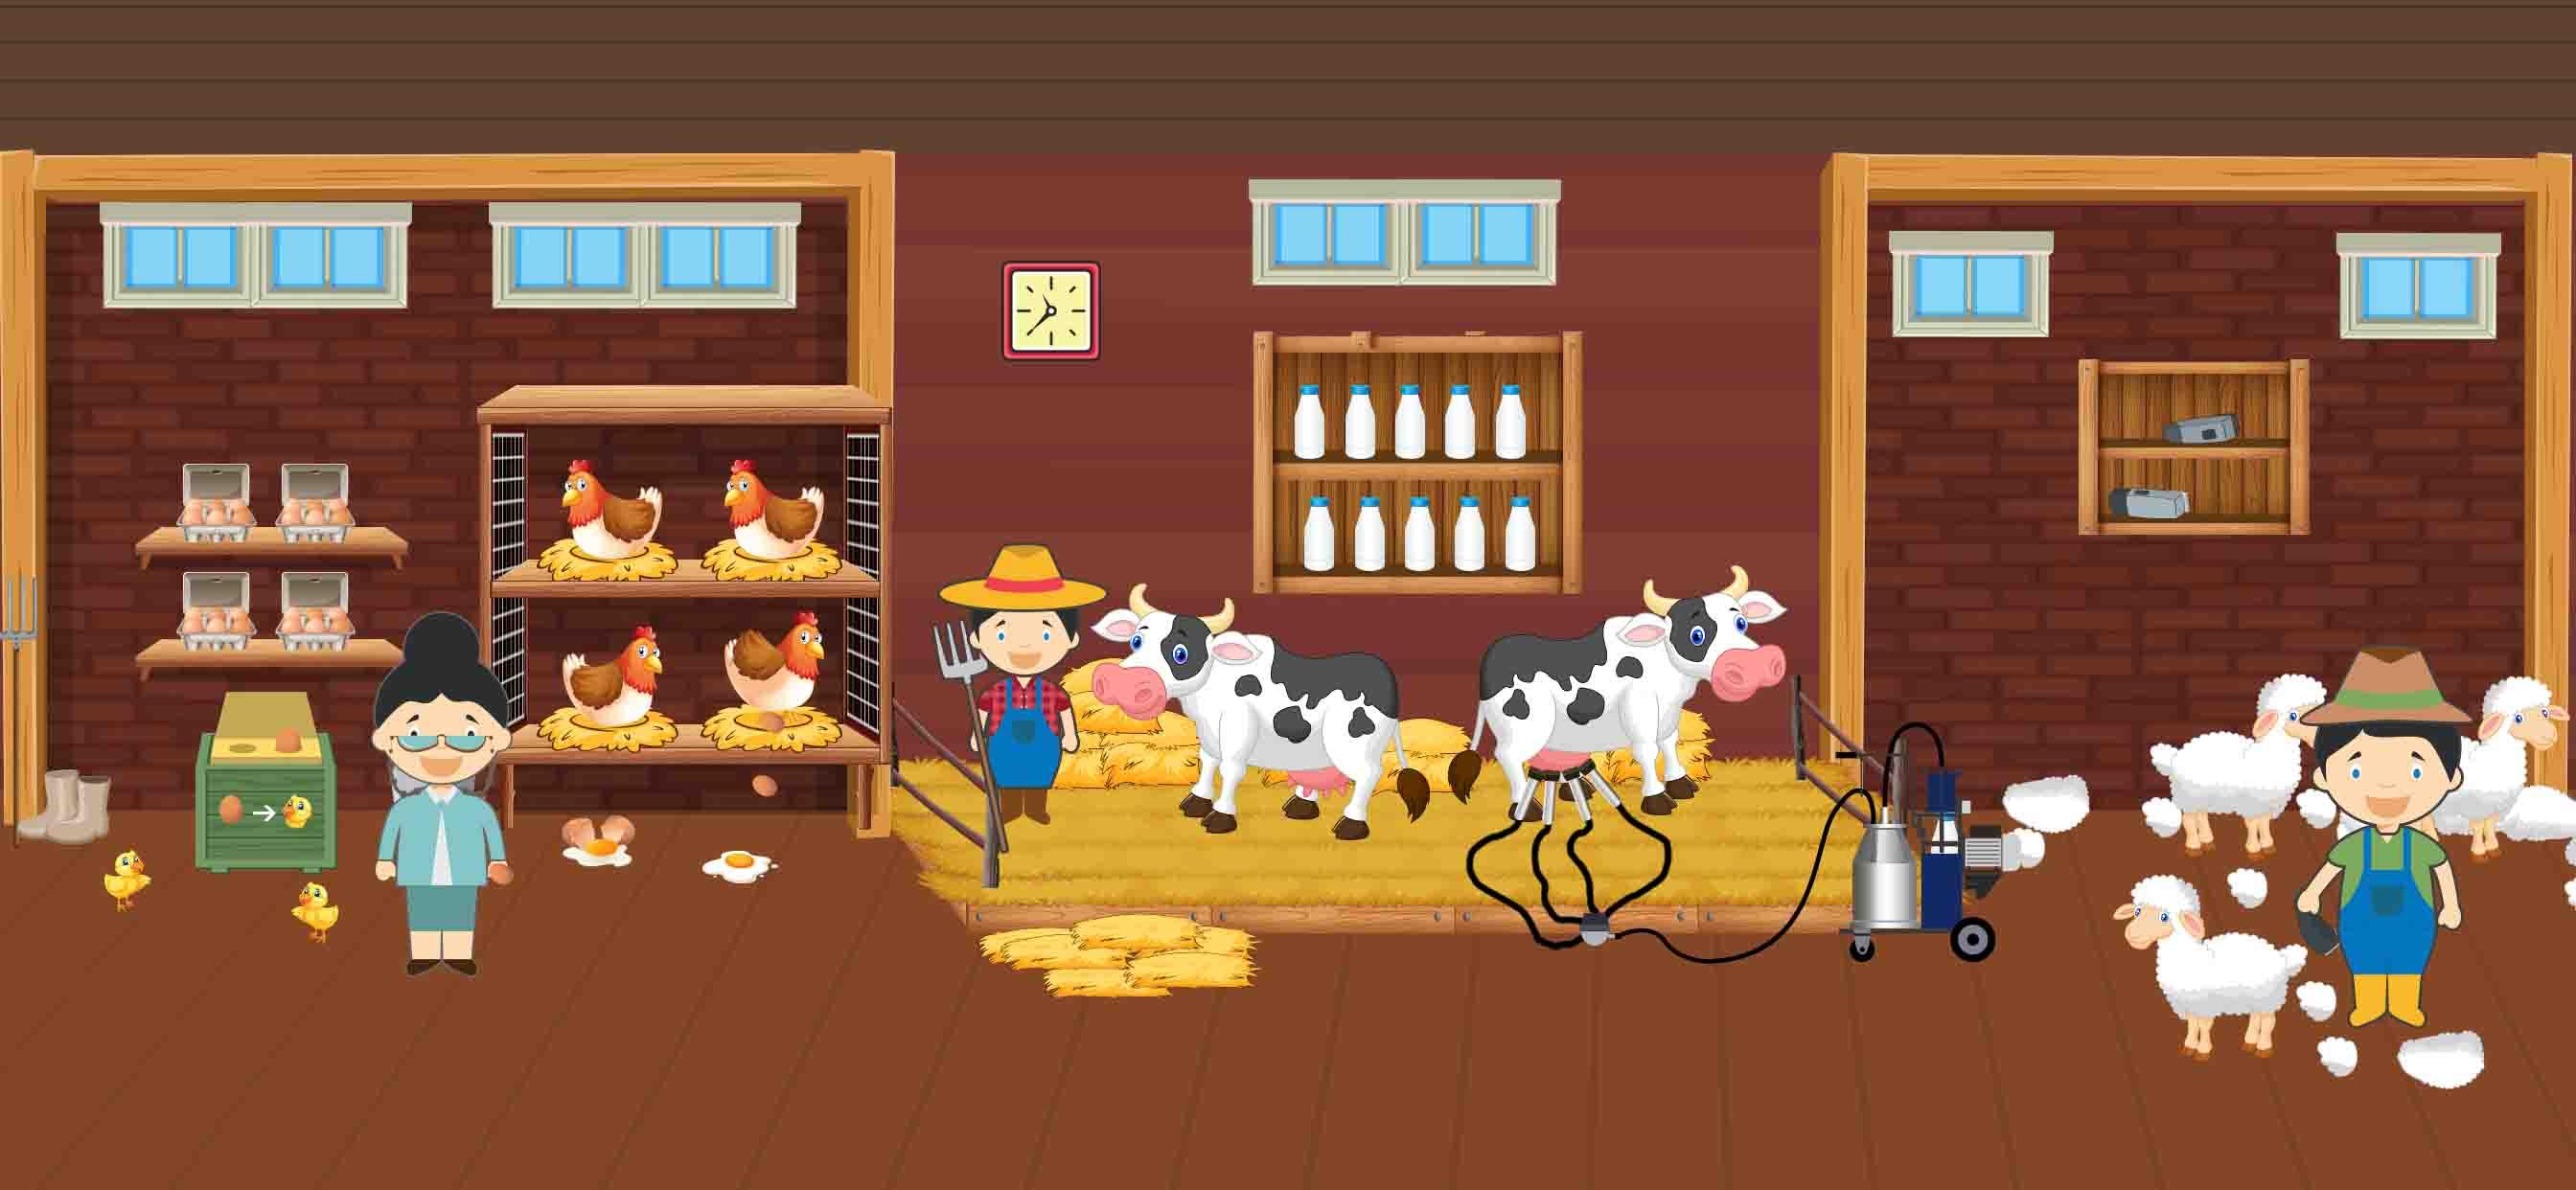 Pretend Town Farm House: Explore Farming World 1.1 Screenshot 14